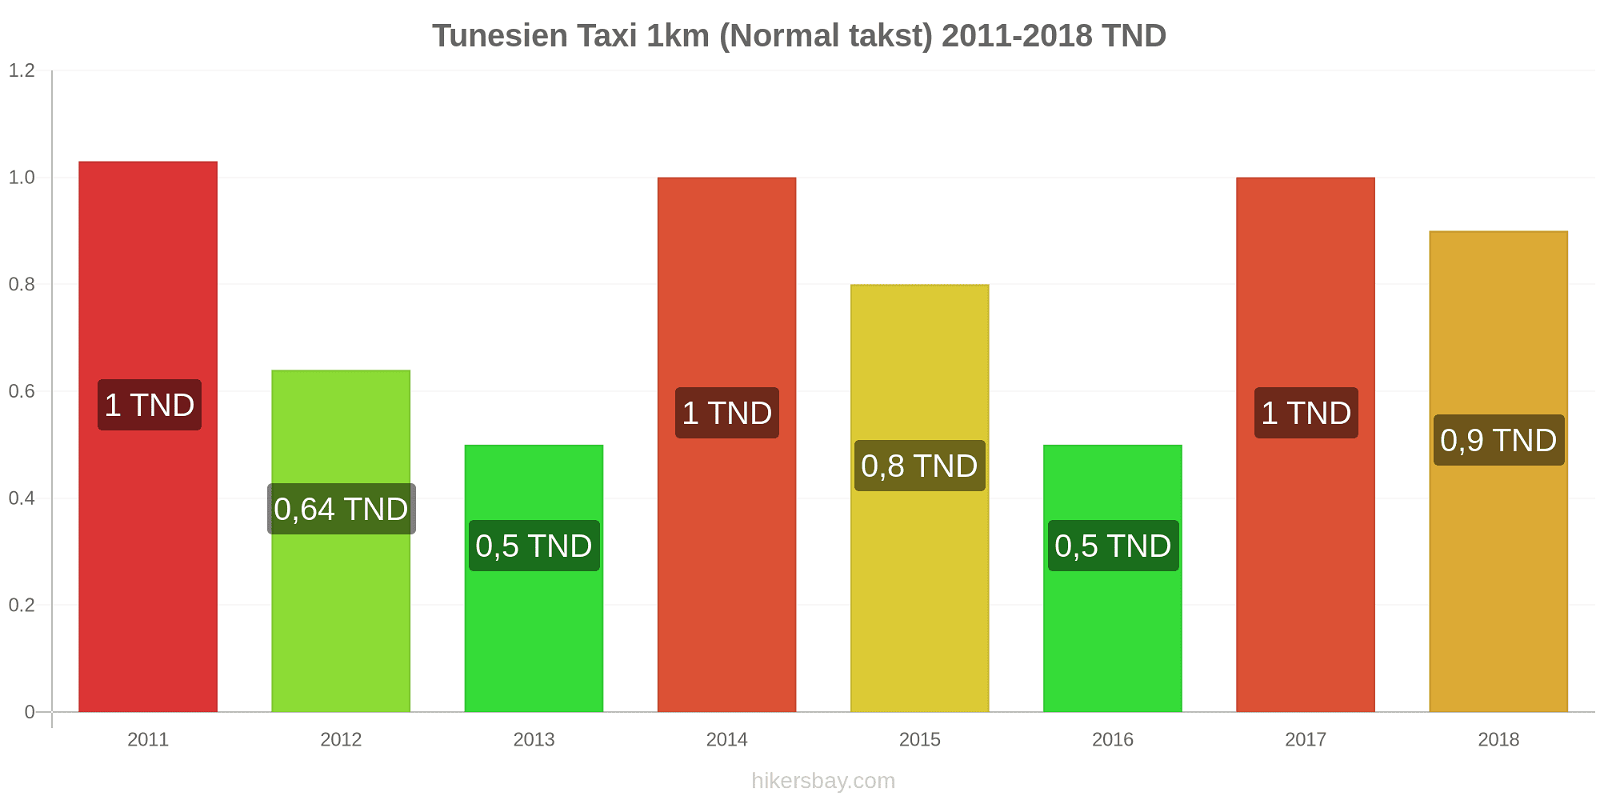 Tunesien prisændringer Taxi 1km (normal takst) hikersbay.com